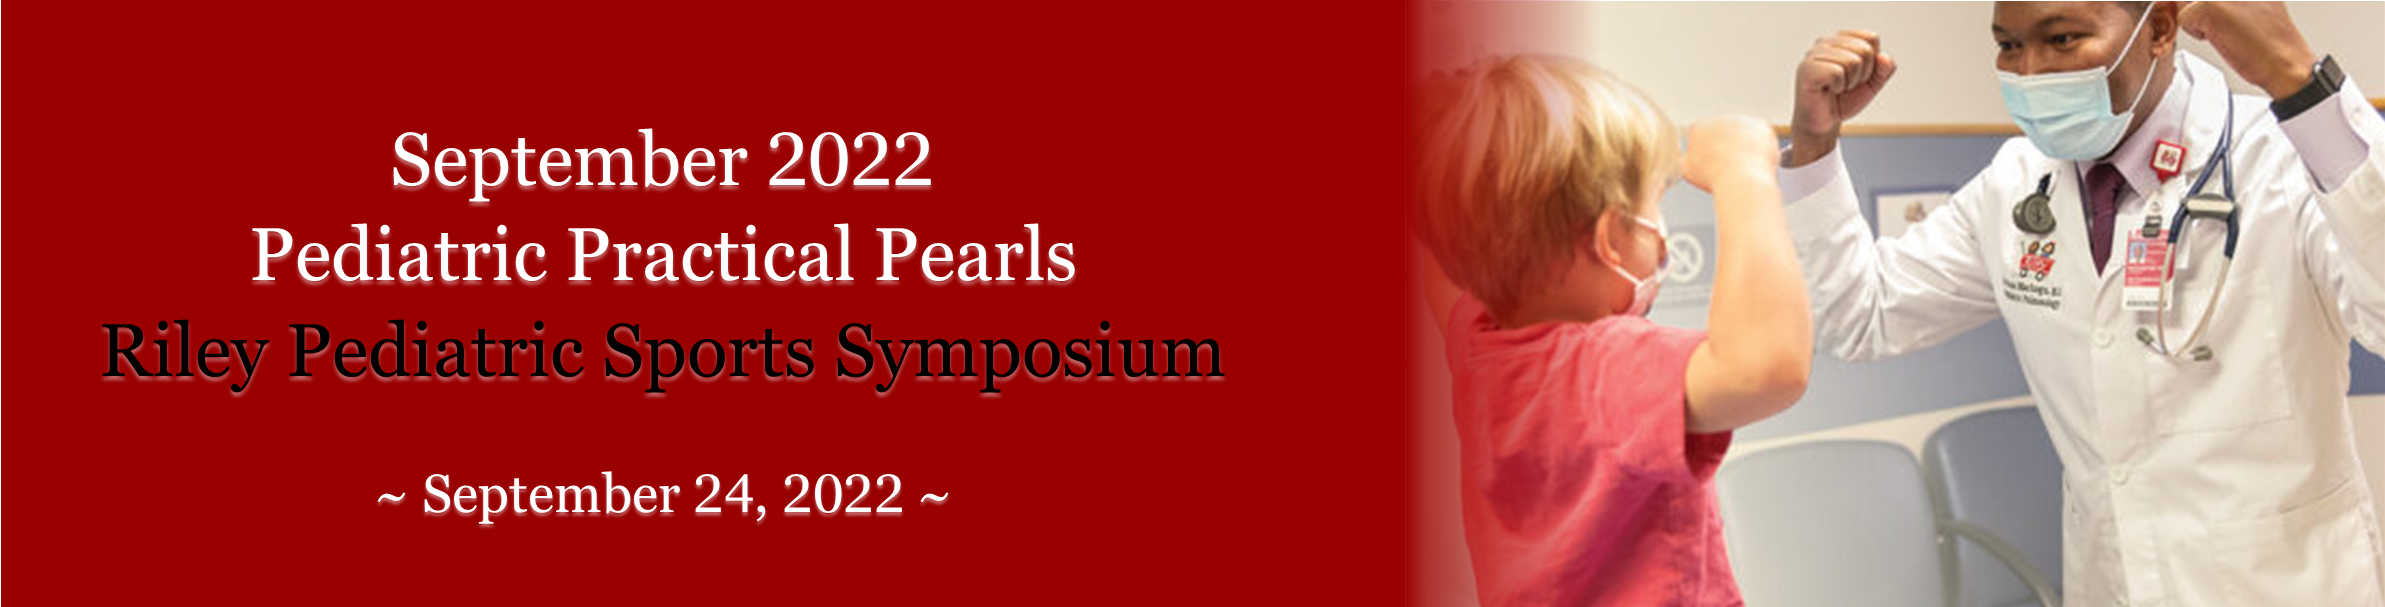 September 2022 Pediatric Practical Pearls: Riley Pediatric Sports Symposium Banner